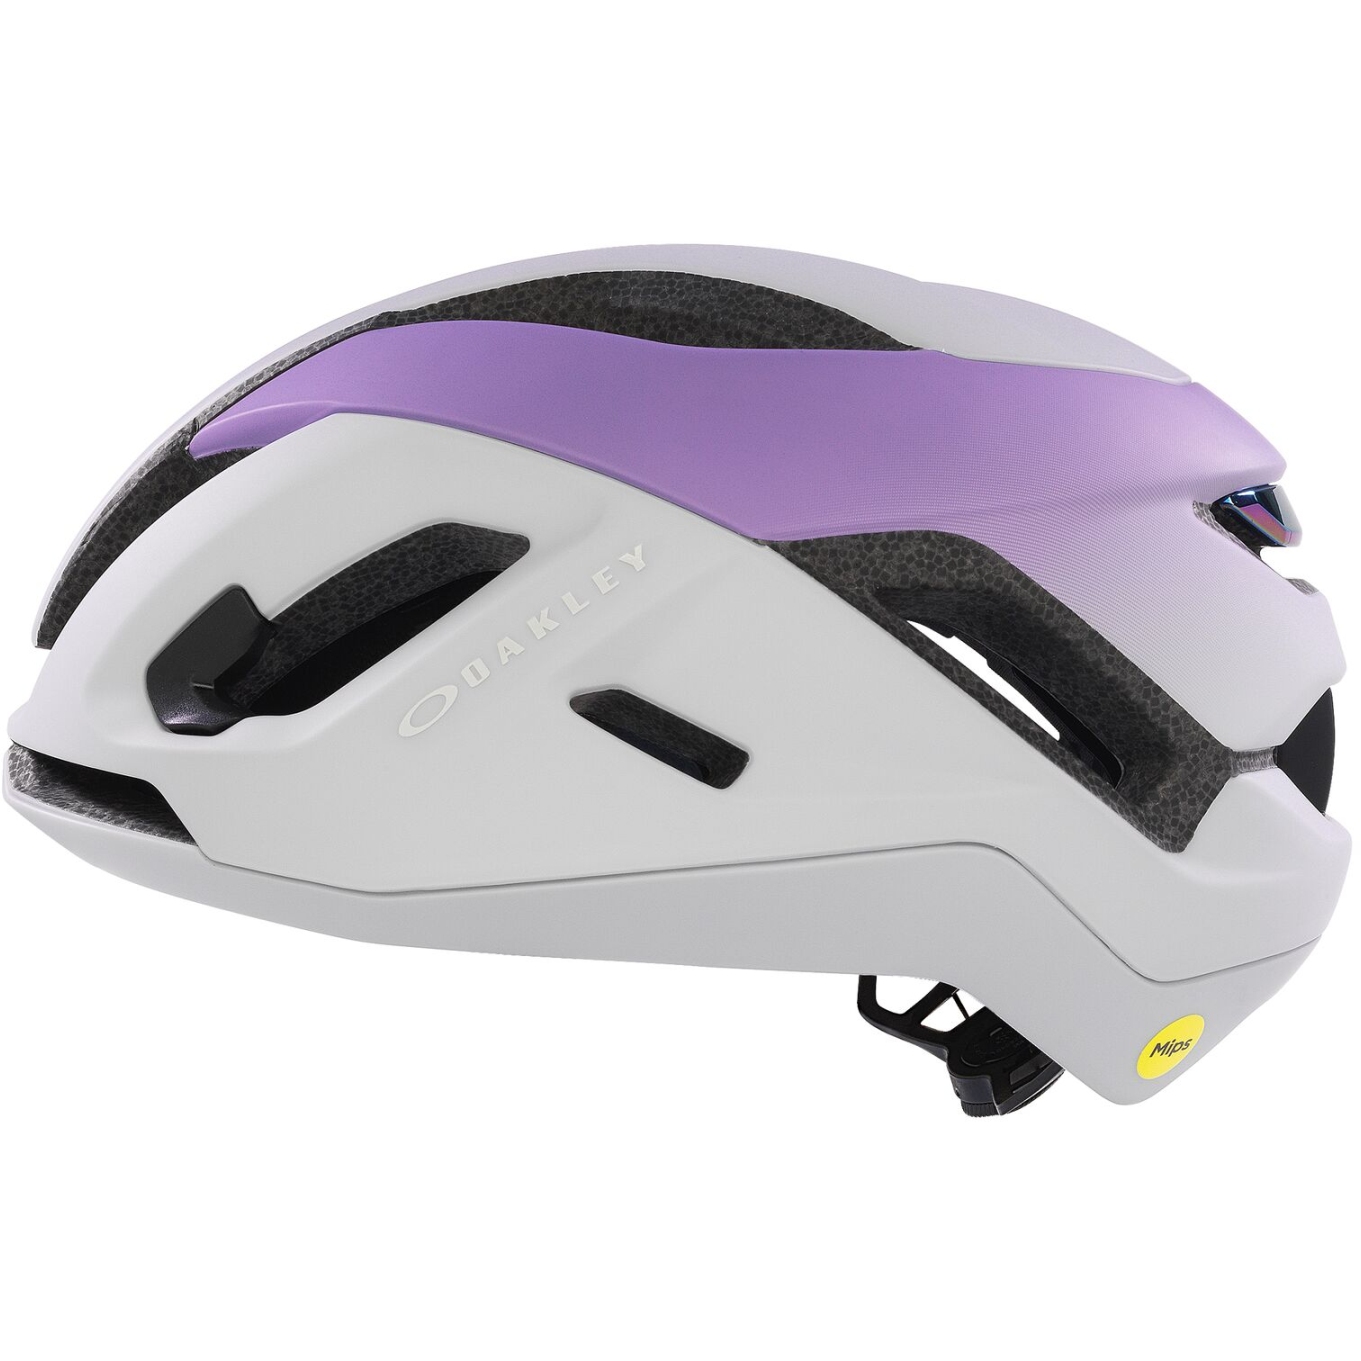 Produktbild von Oakley ARO5 Race EU Helm - Light Gray/Lilac